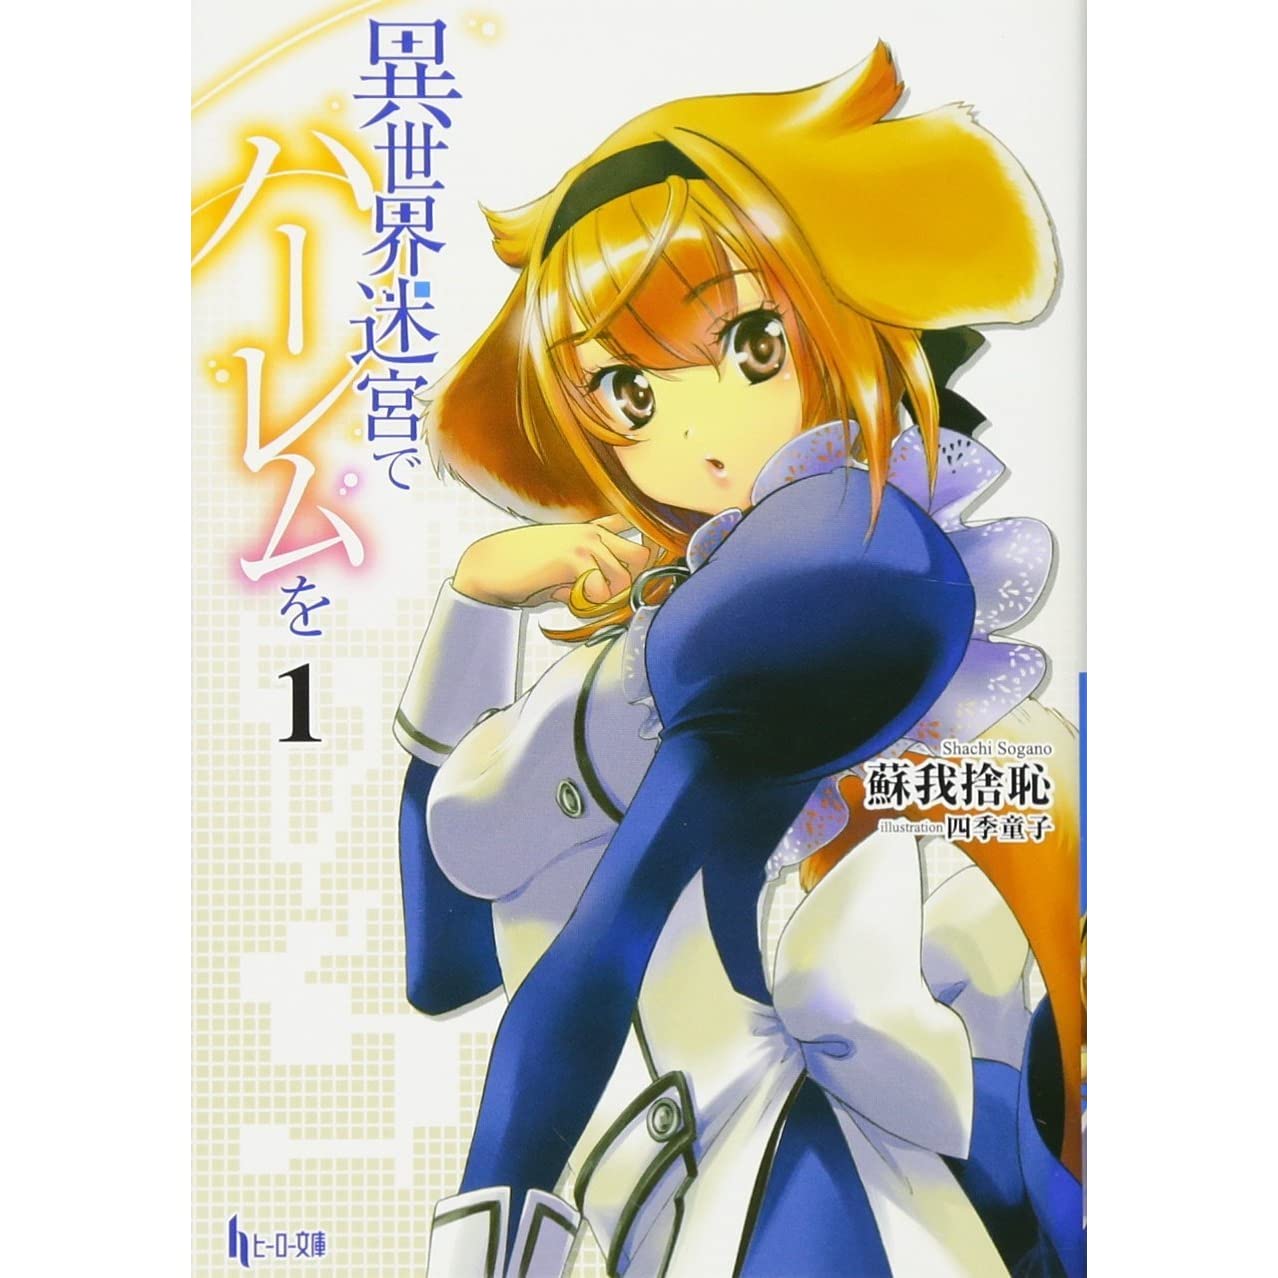 Isekai Meikyuu de Harem wo Image by Passione (Studio) #3610017 - Zerochan  Anime Image Board